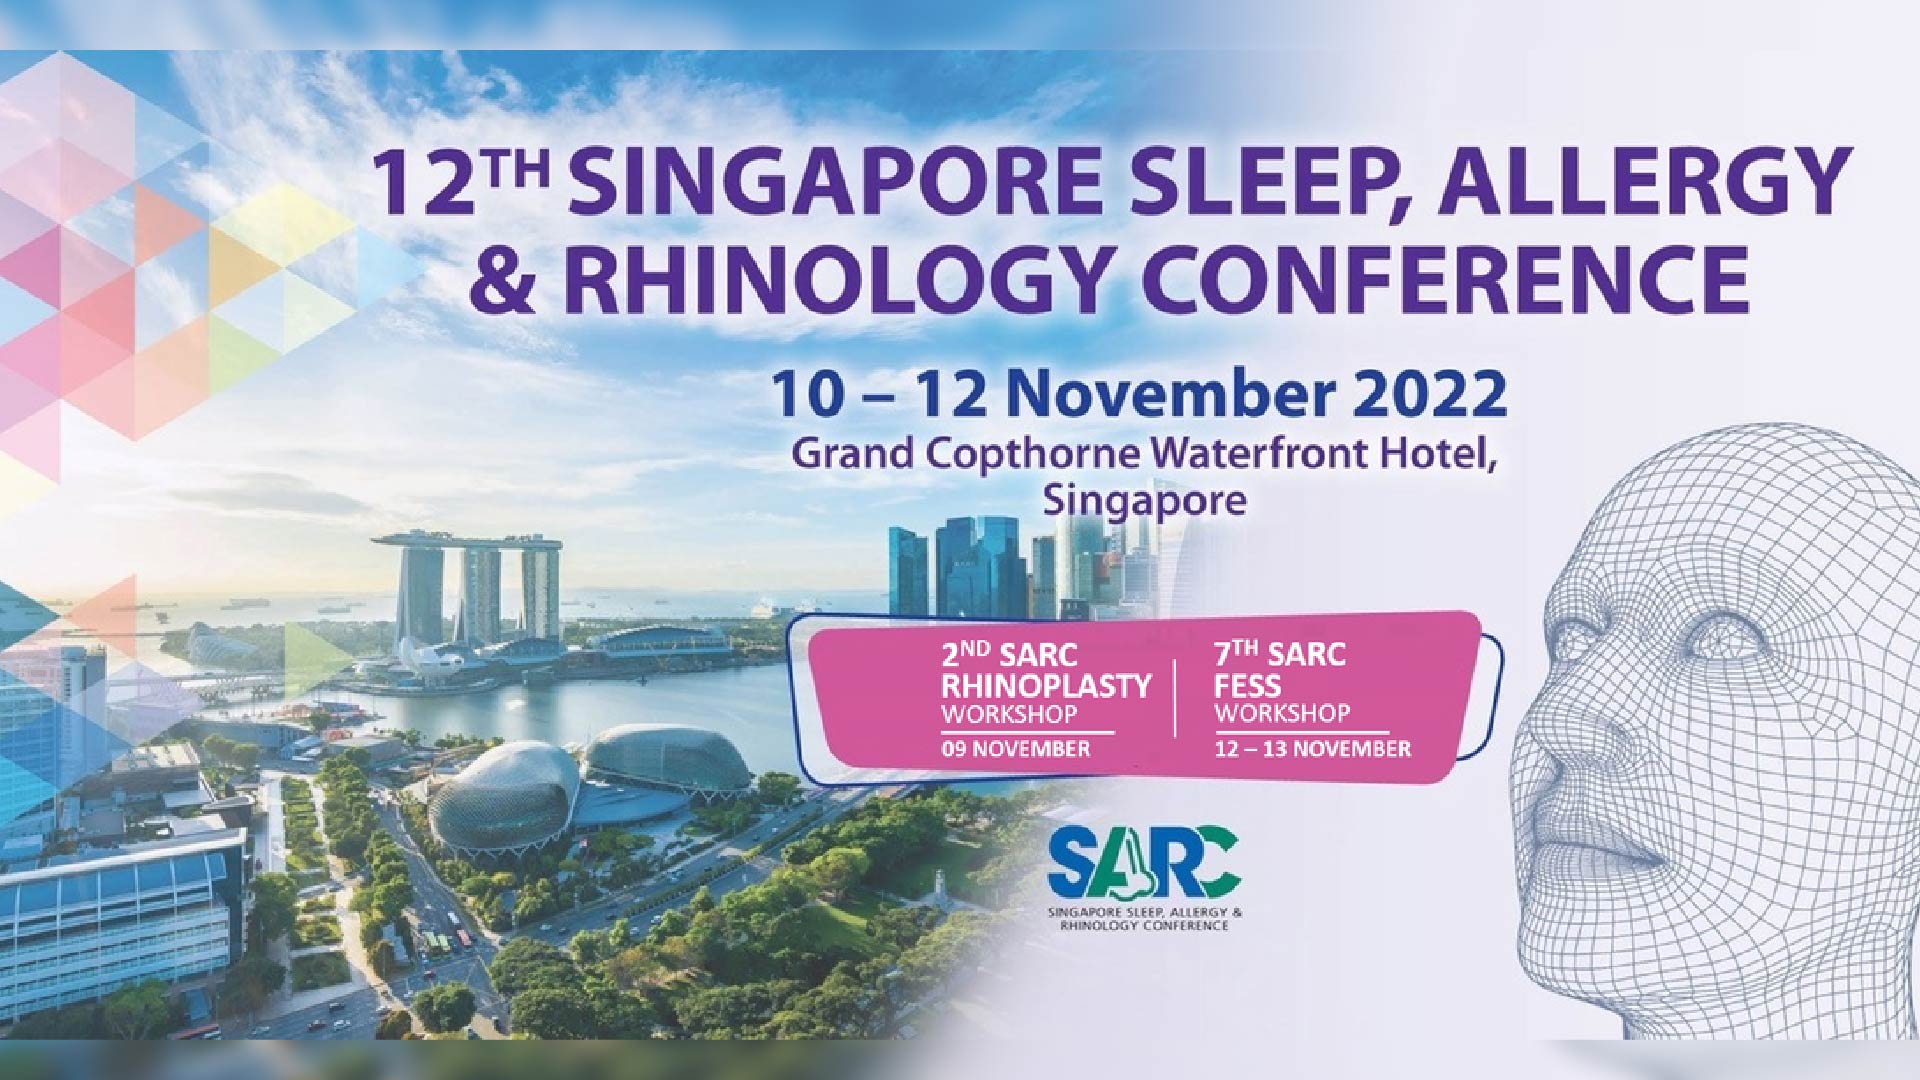 Siriraj attended the “12th Singapore Sleep, Allergy & Rhinology